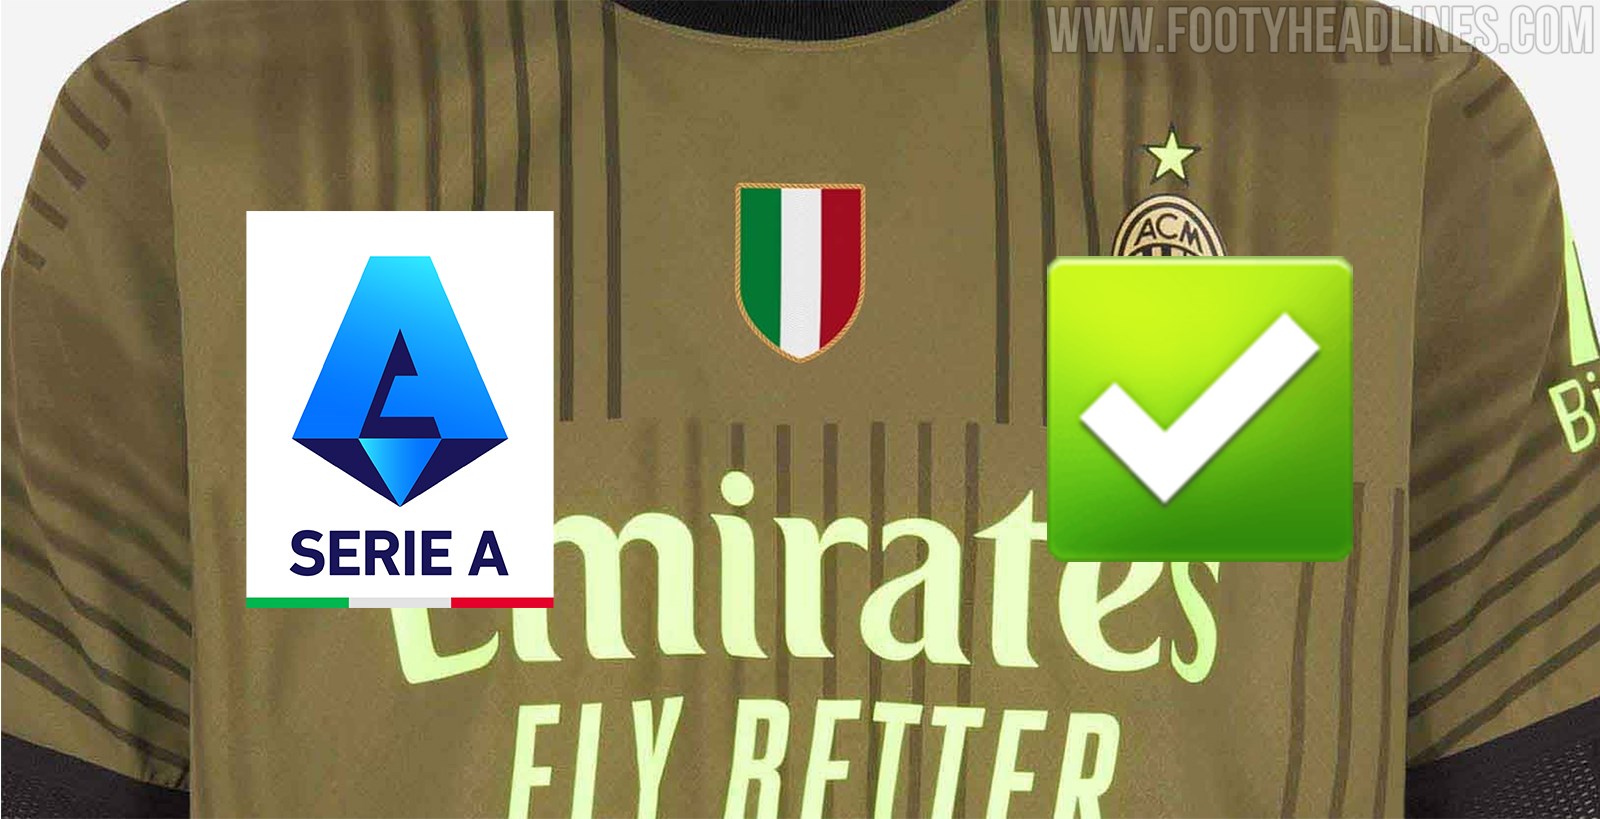 AC Milan 16/17 Adidas Third Kit - Football Shirt Culture - Latest Football  Kit News and More